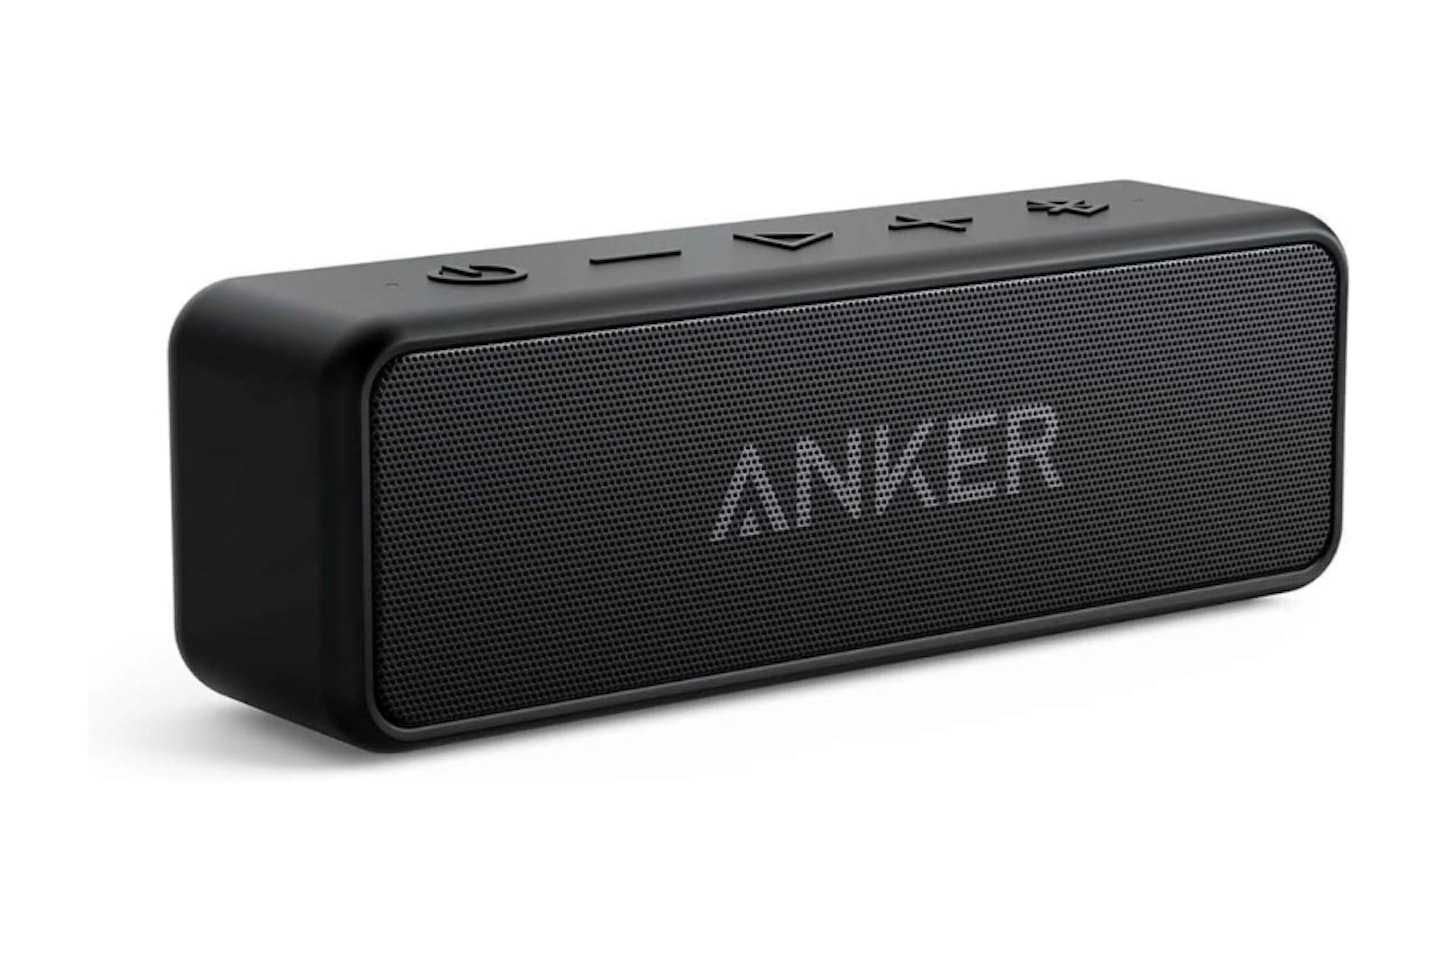 
Anker Soundcore 2 Portable Bluetooth Speaker